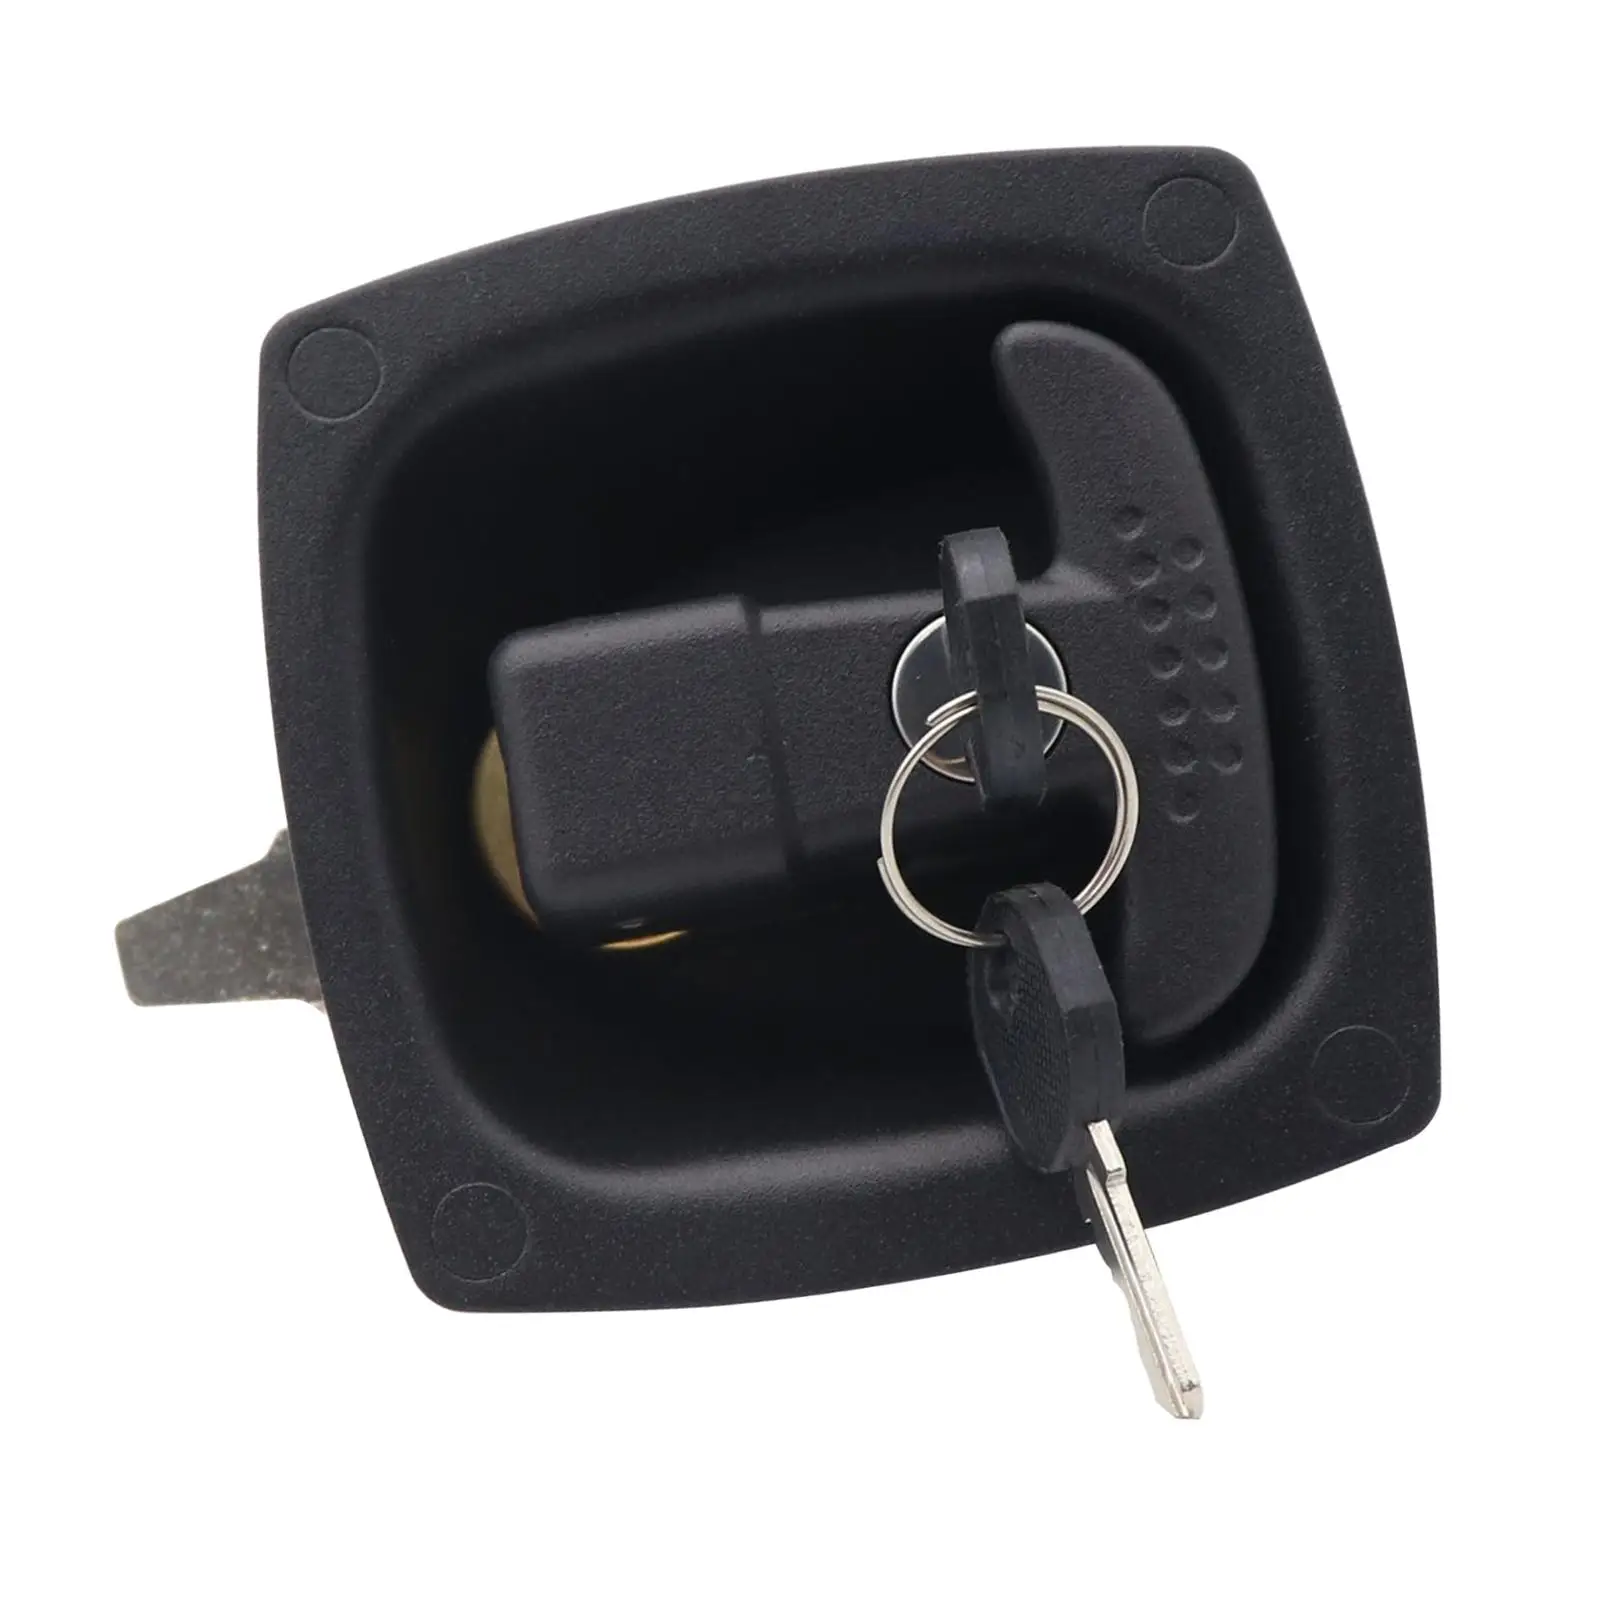 Folding Compression Tool Box Lock Zinc Alloy Secure Locking 11cmx11cm Ergonomic Door Lock Replacements for RV Boat Sturdy